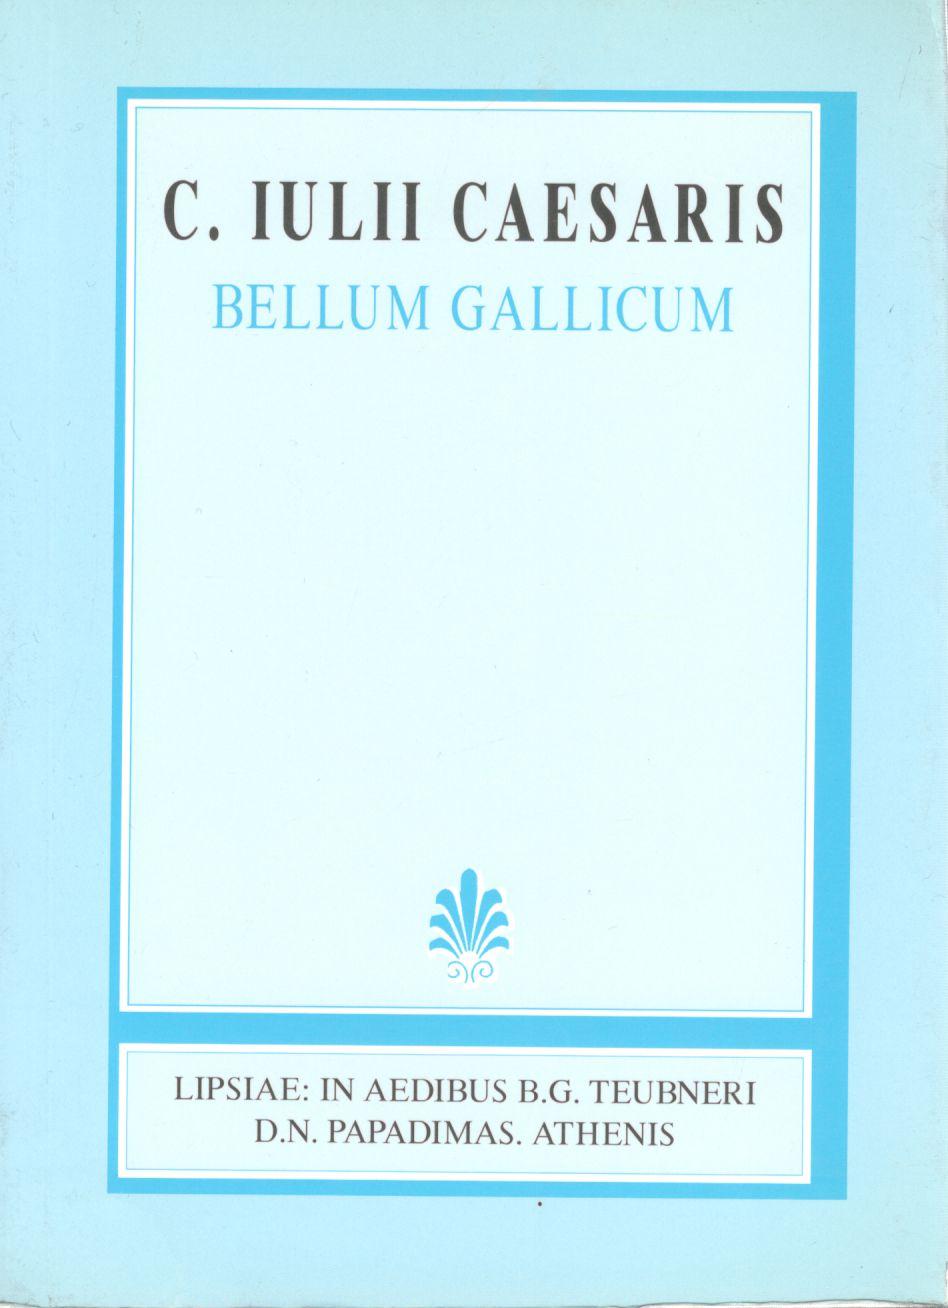 C. IULII CAESARIS, BELLUM GALLICUM, (ΙΟΥΛΙΟΥ ΚΑΙΣΑΡΟΣ, ΑΠΟΜΝΗΜΟΝΕΥΜΑΤΑ ΠΕΡΙ ΤΟΥ ΓΑΛΑΤΙΚΟΥ ΠΟΛΕΜΟΥ)